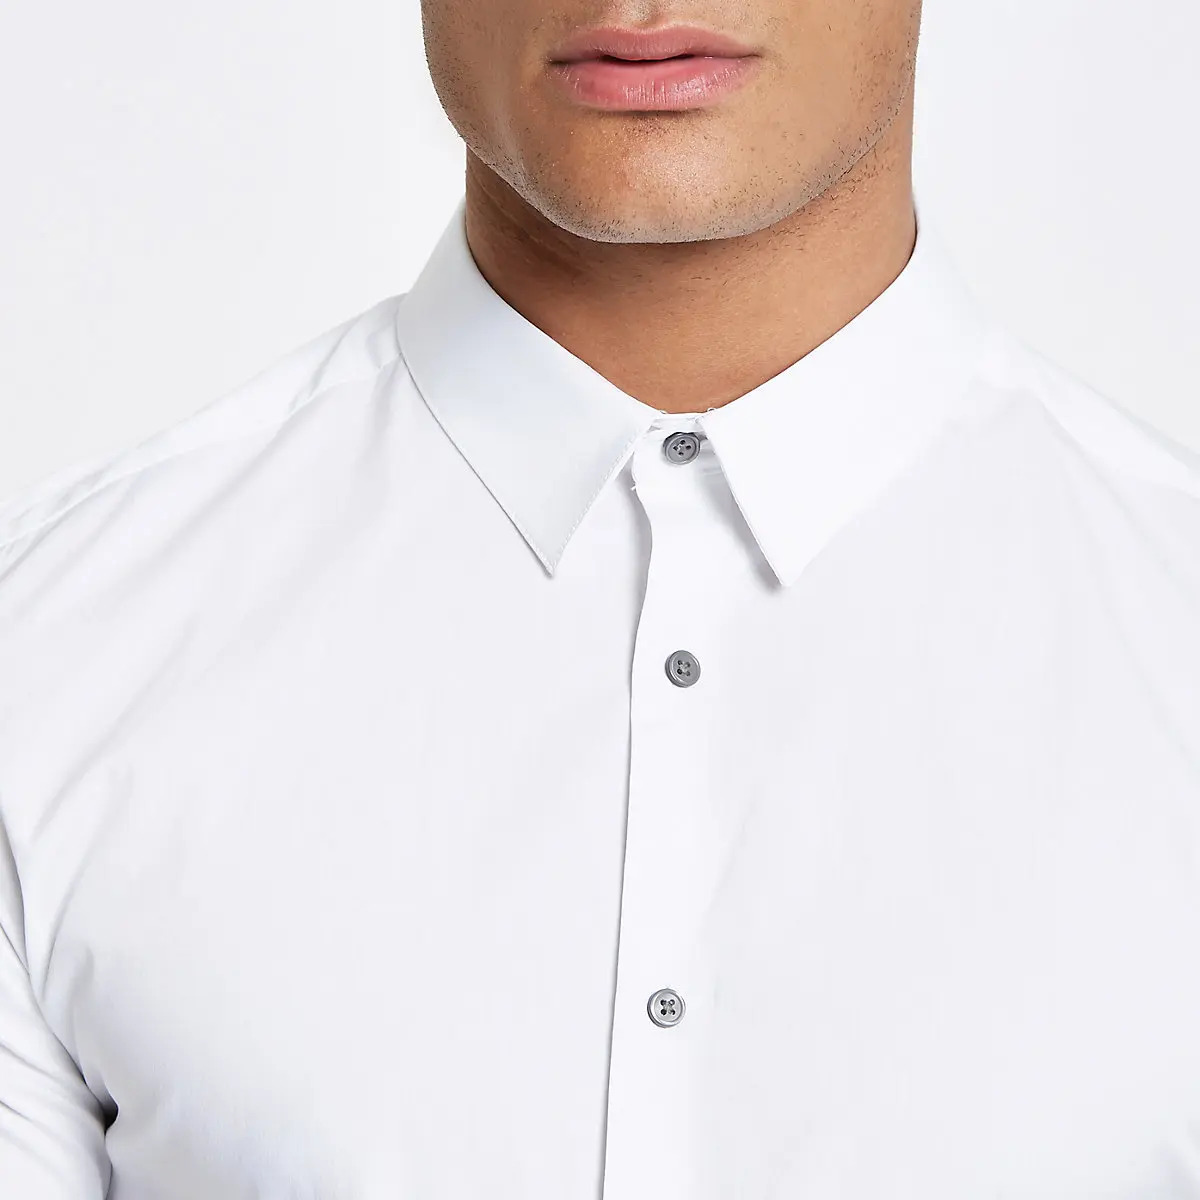 Fashion Man Shirt Designs Mens White Clothes Shirt For Party - Buy Mens ...